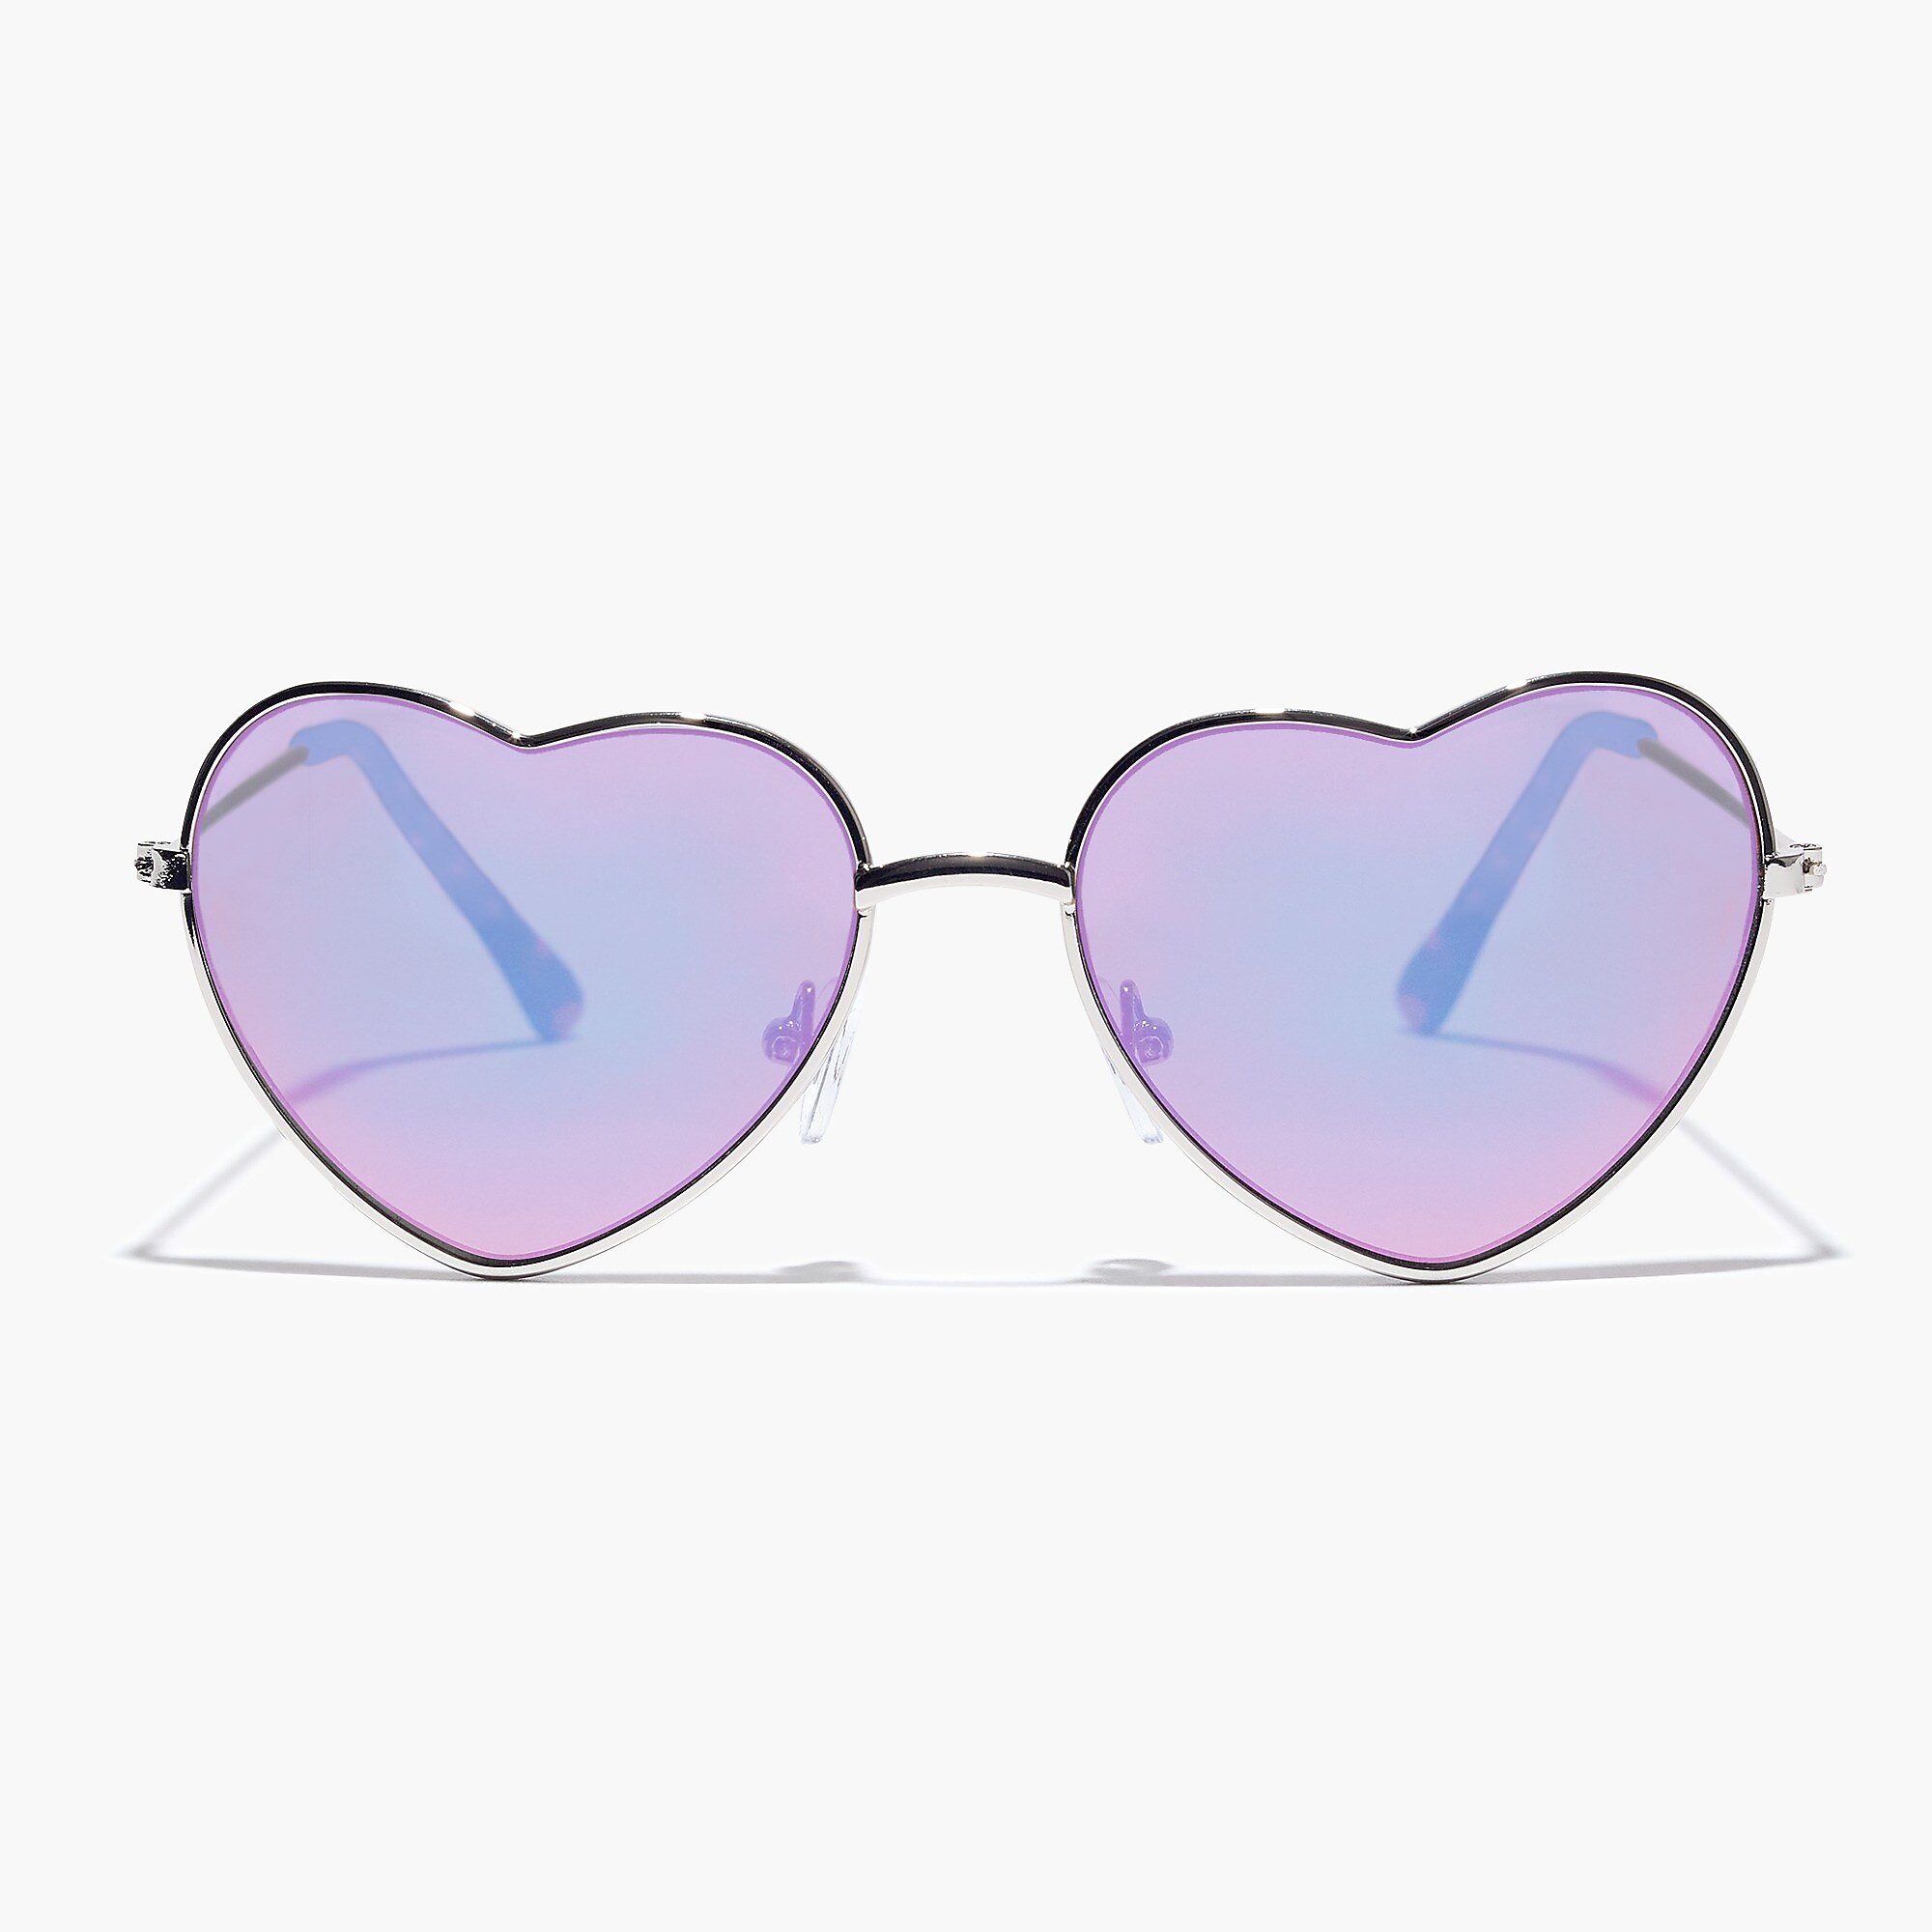 J.Crew heart-shaped sunglasses